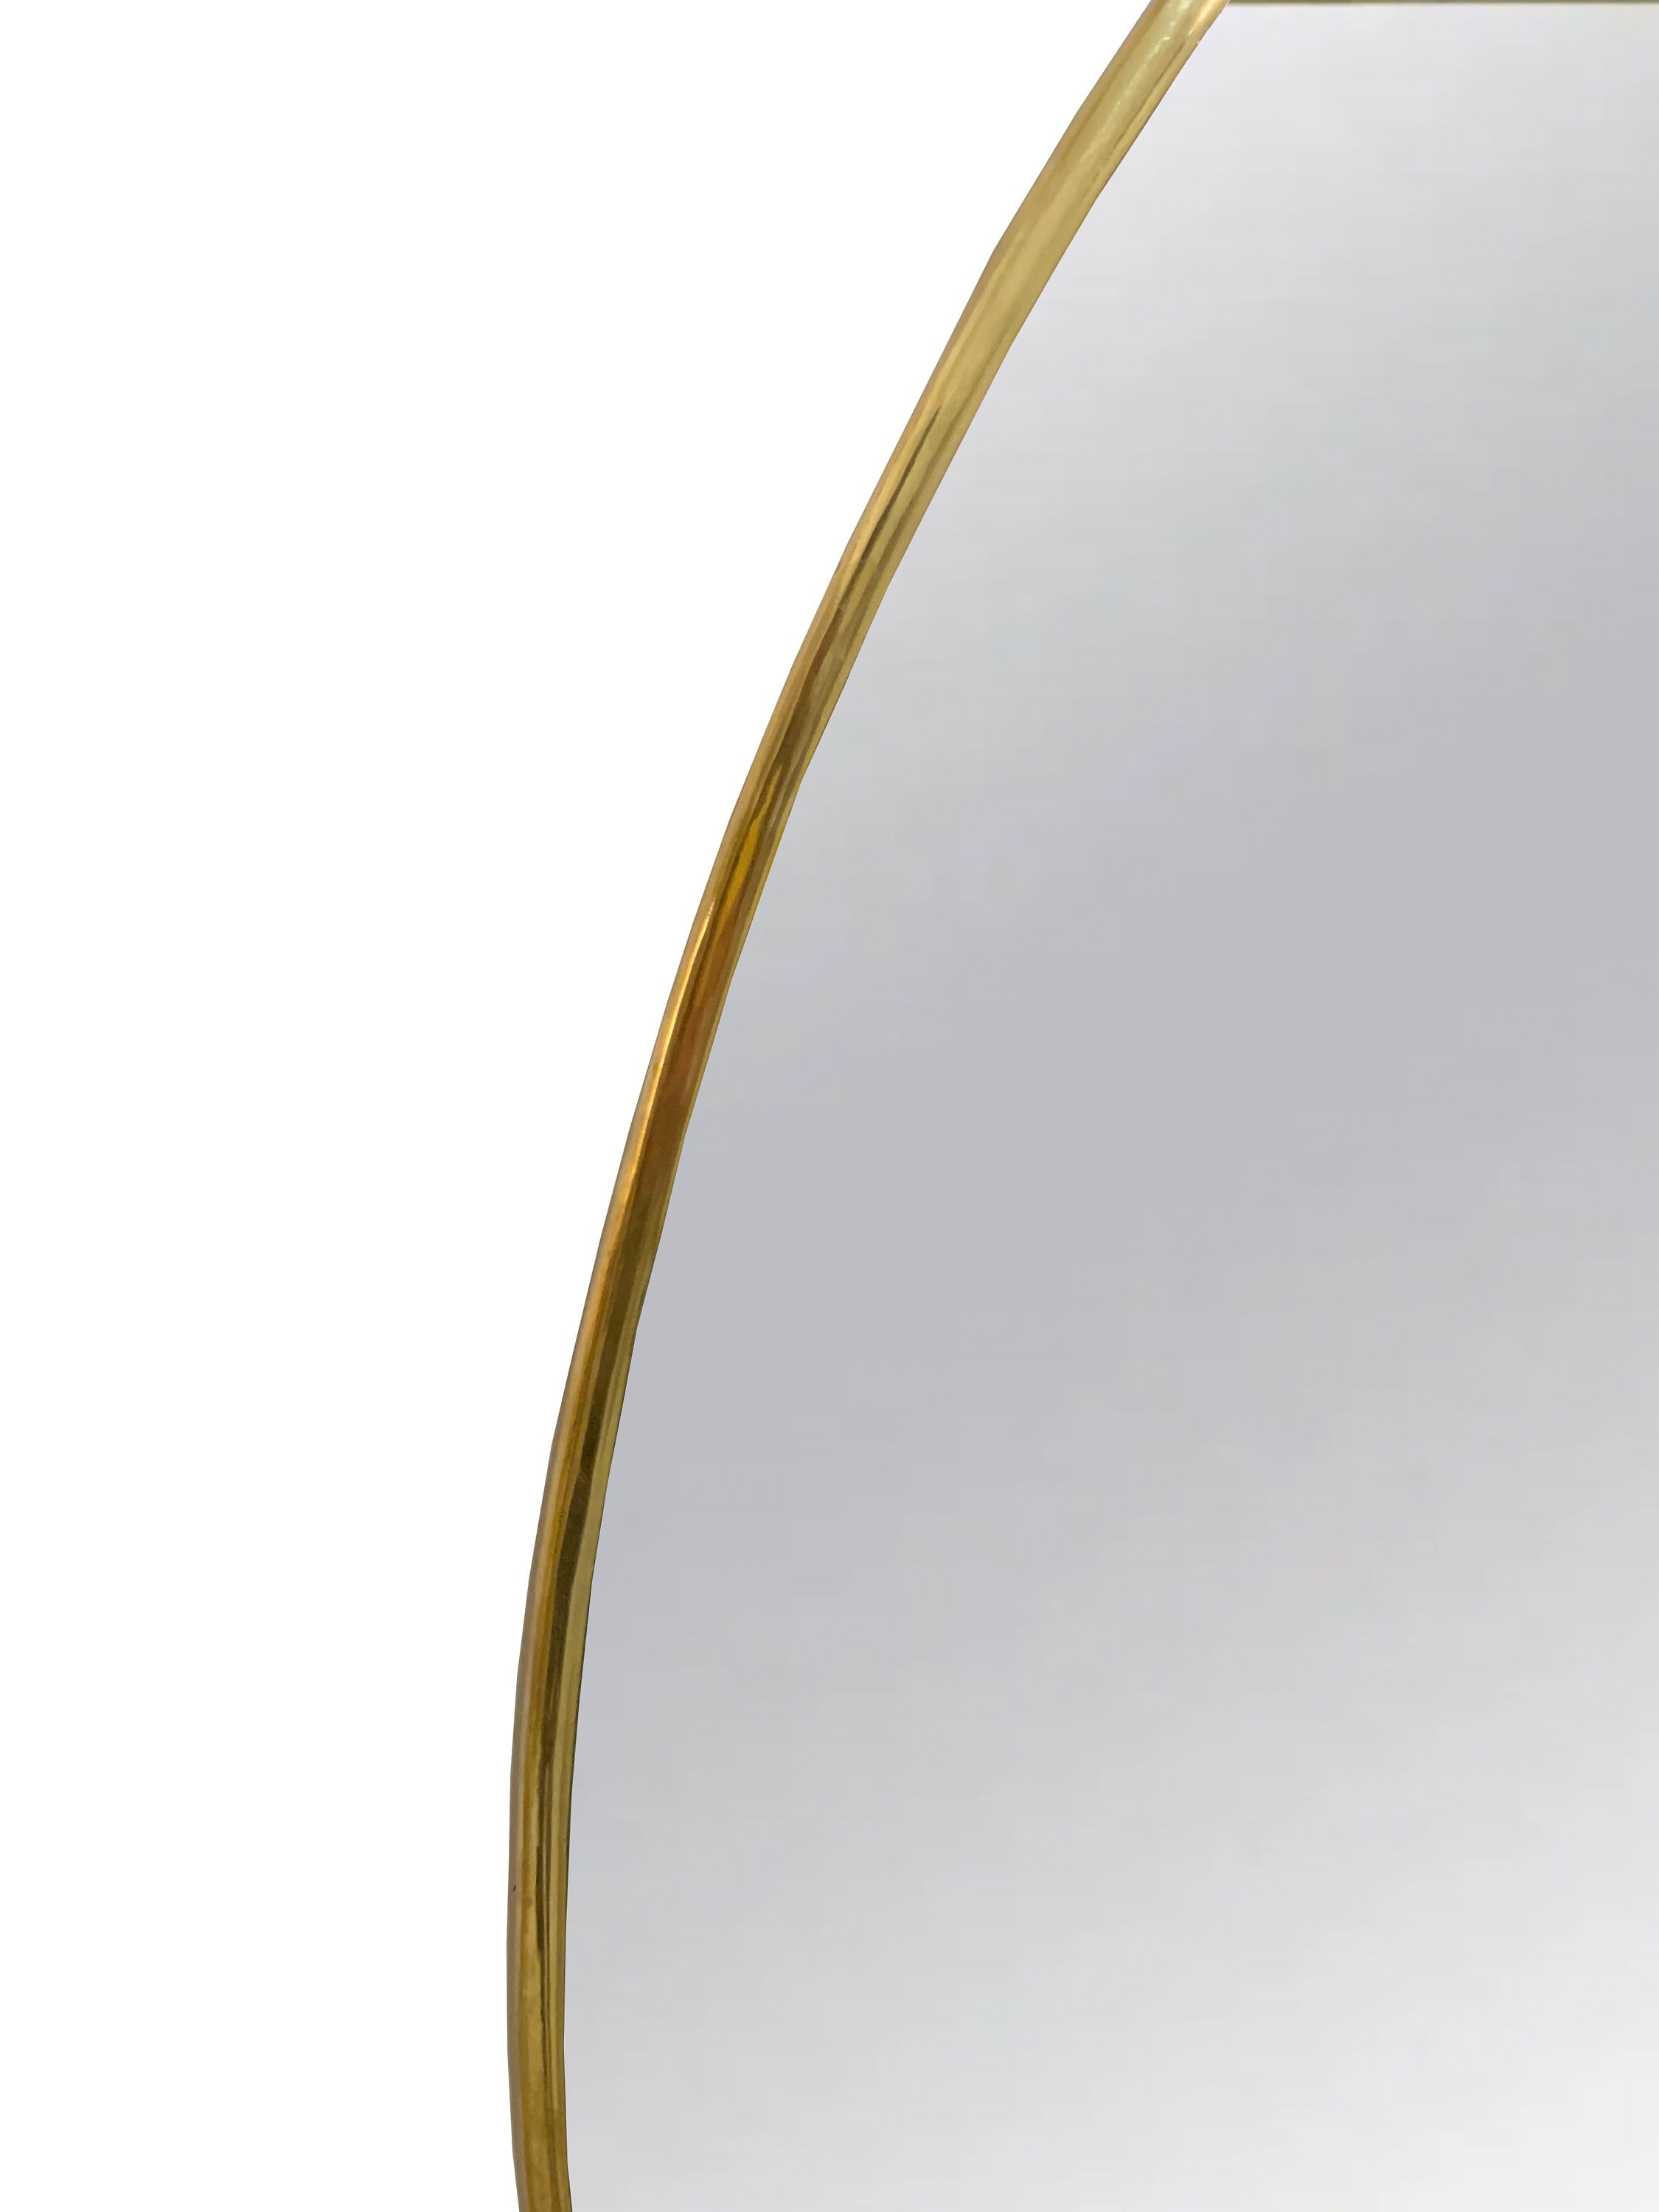 Handmade Asymmetrical Brass Mirror | Unique Home Decor | Artistic Wall Hanging Mirror - Zayian